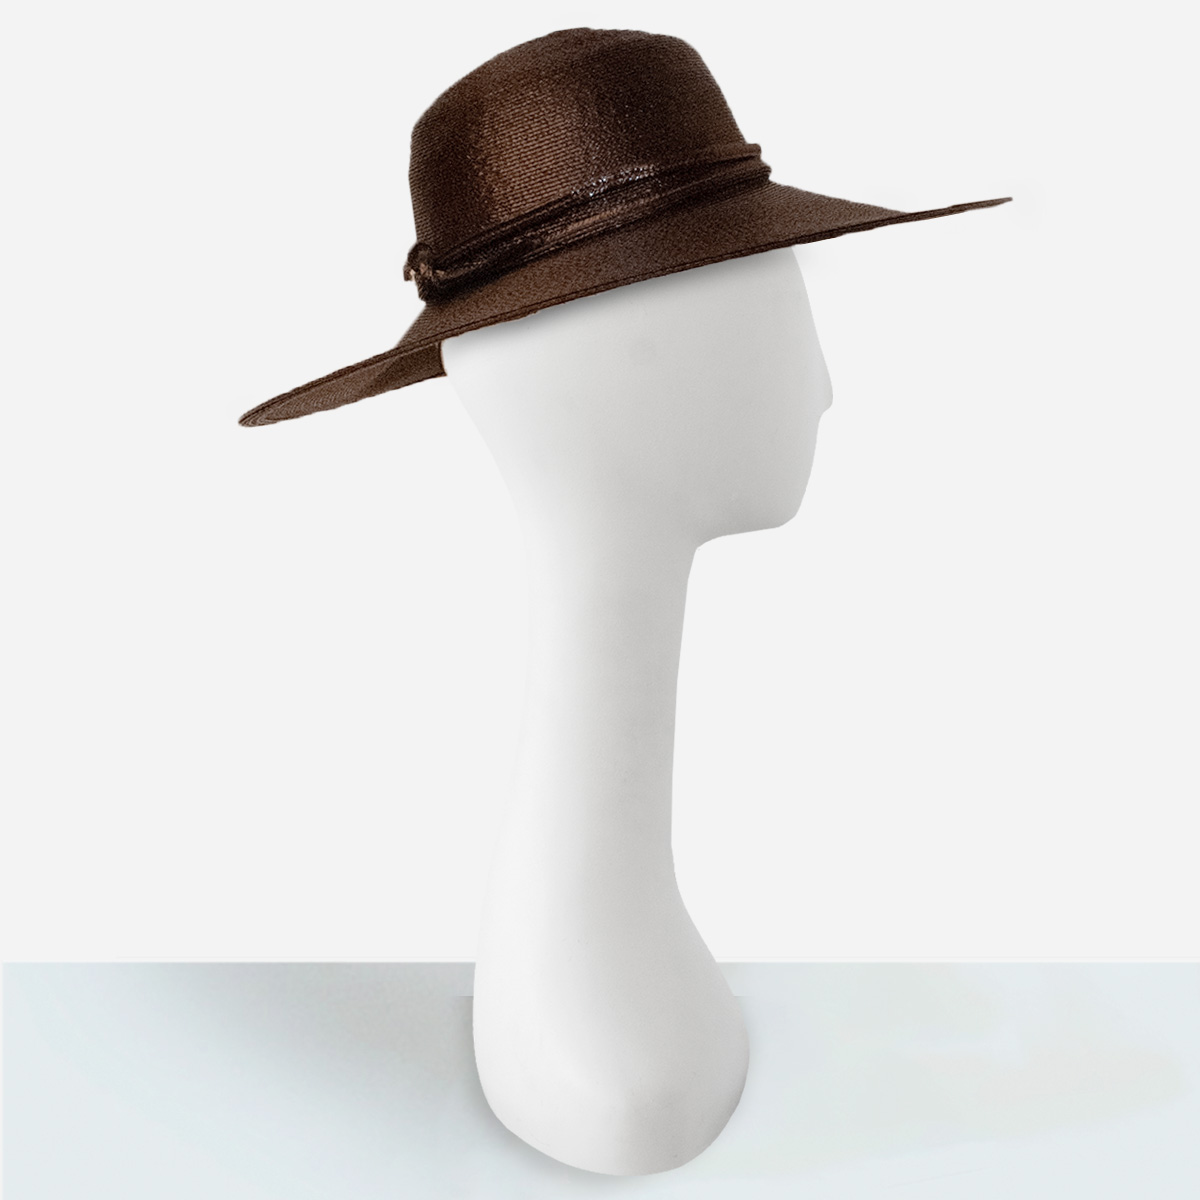 Adele Claire vintage hat